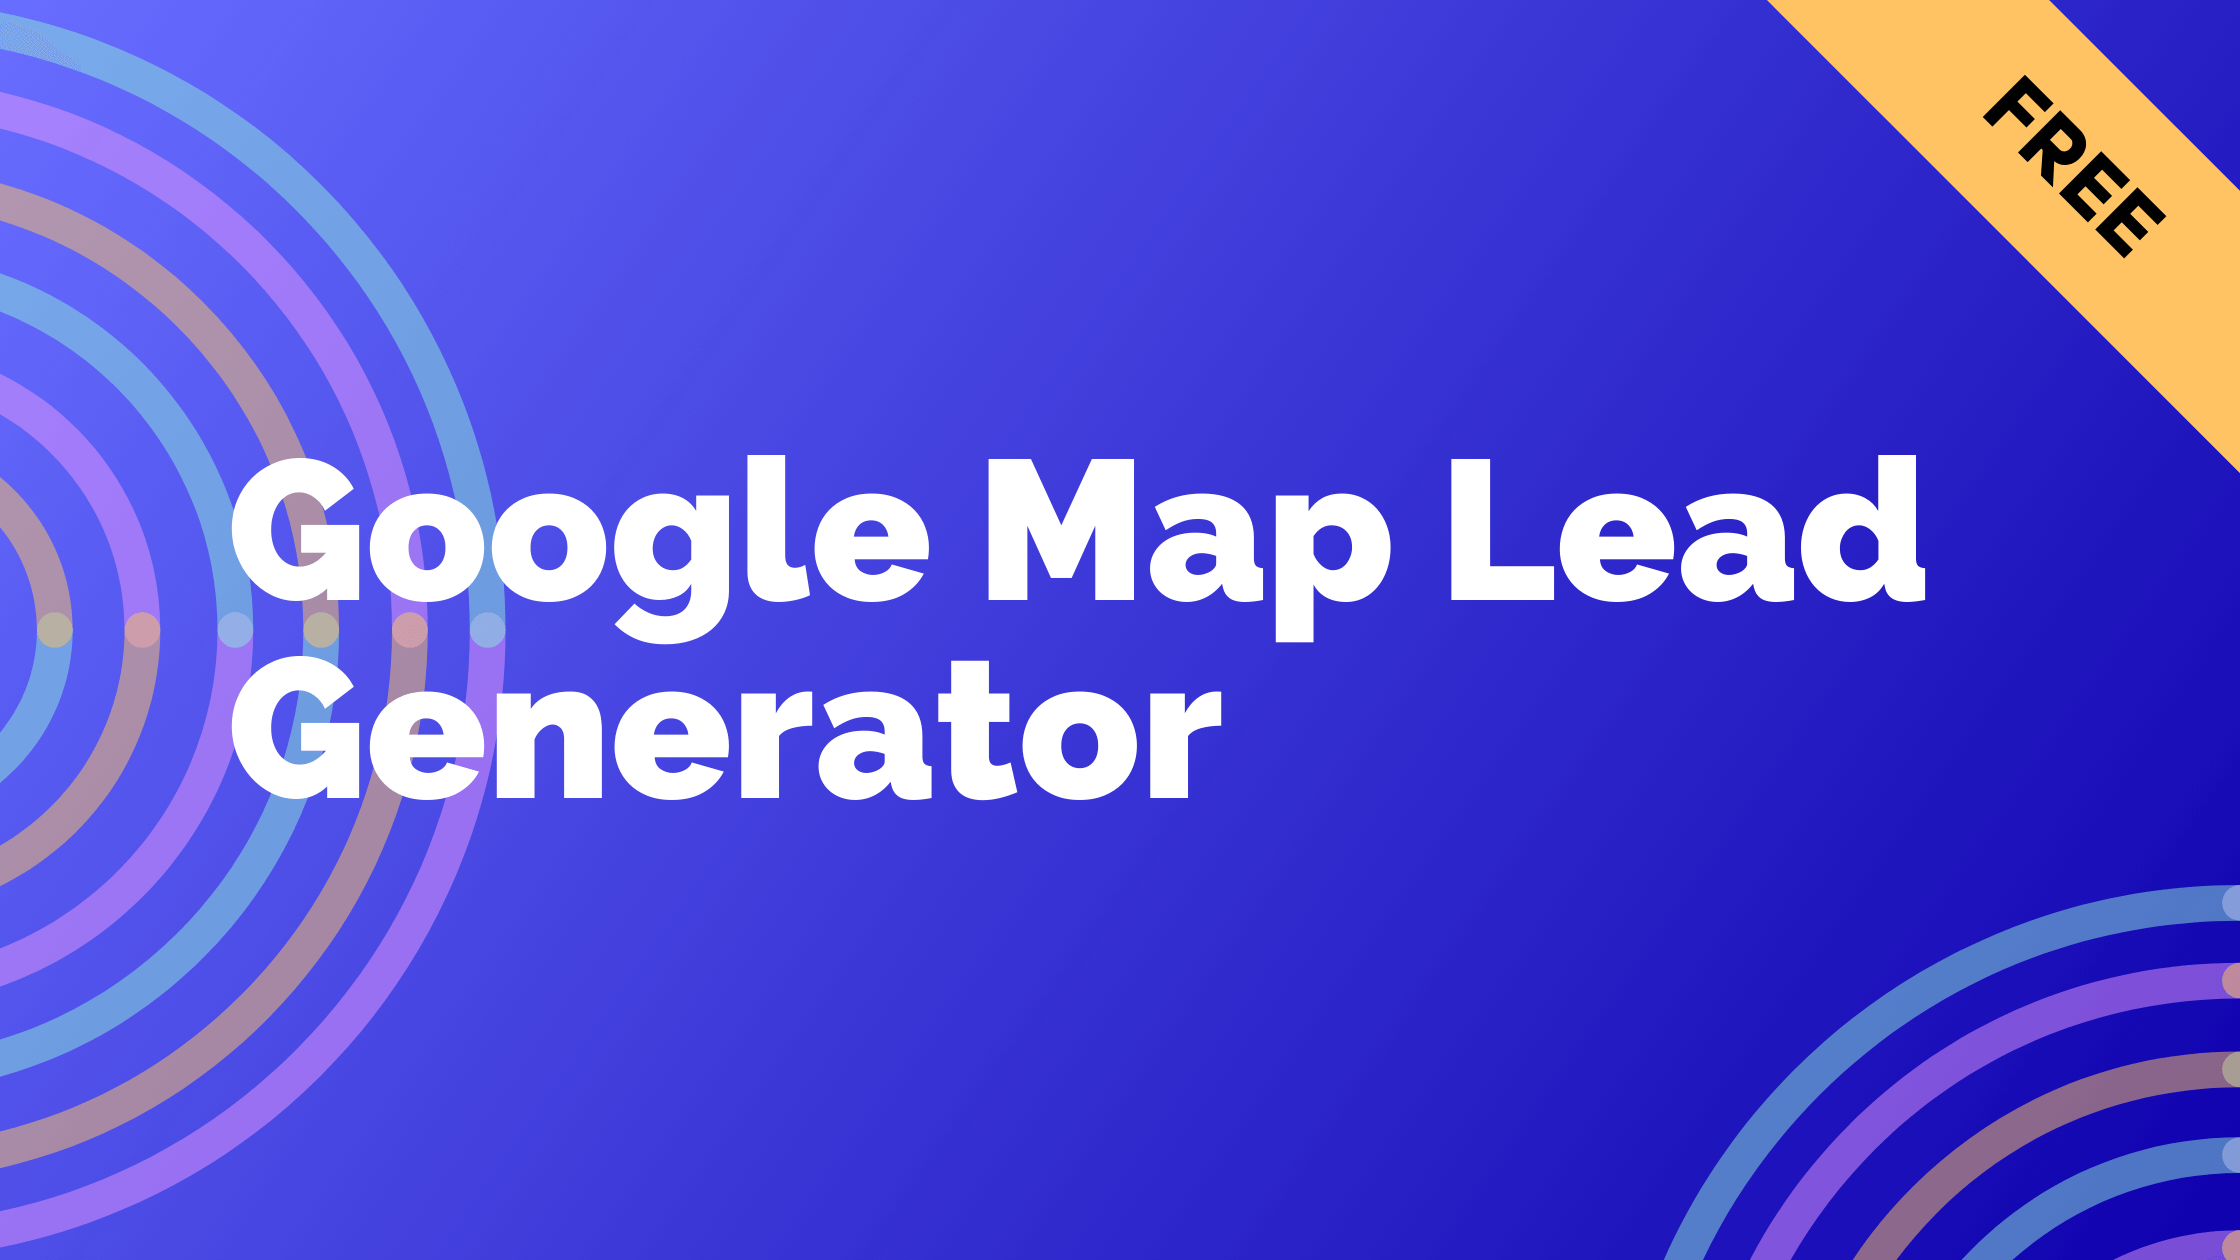 Googleマップリードジェネレーション